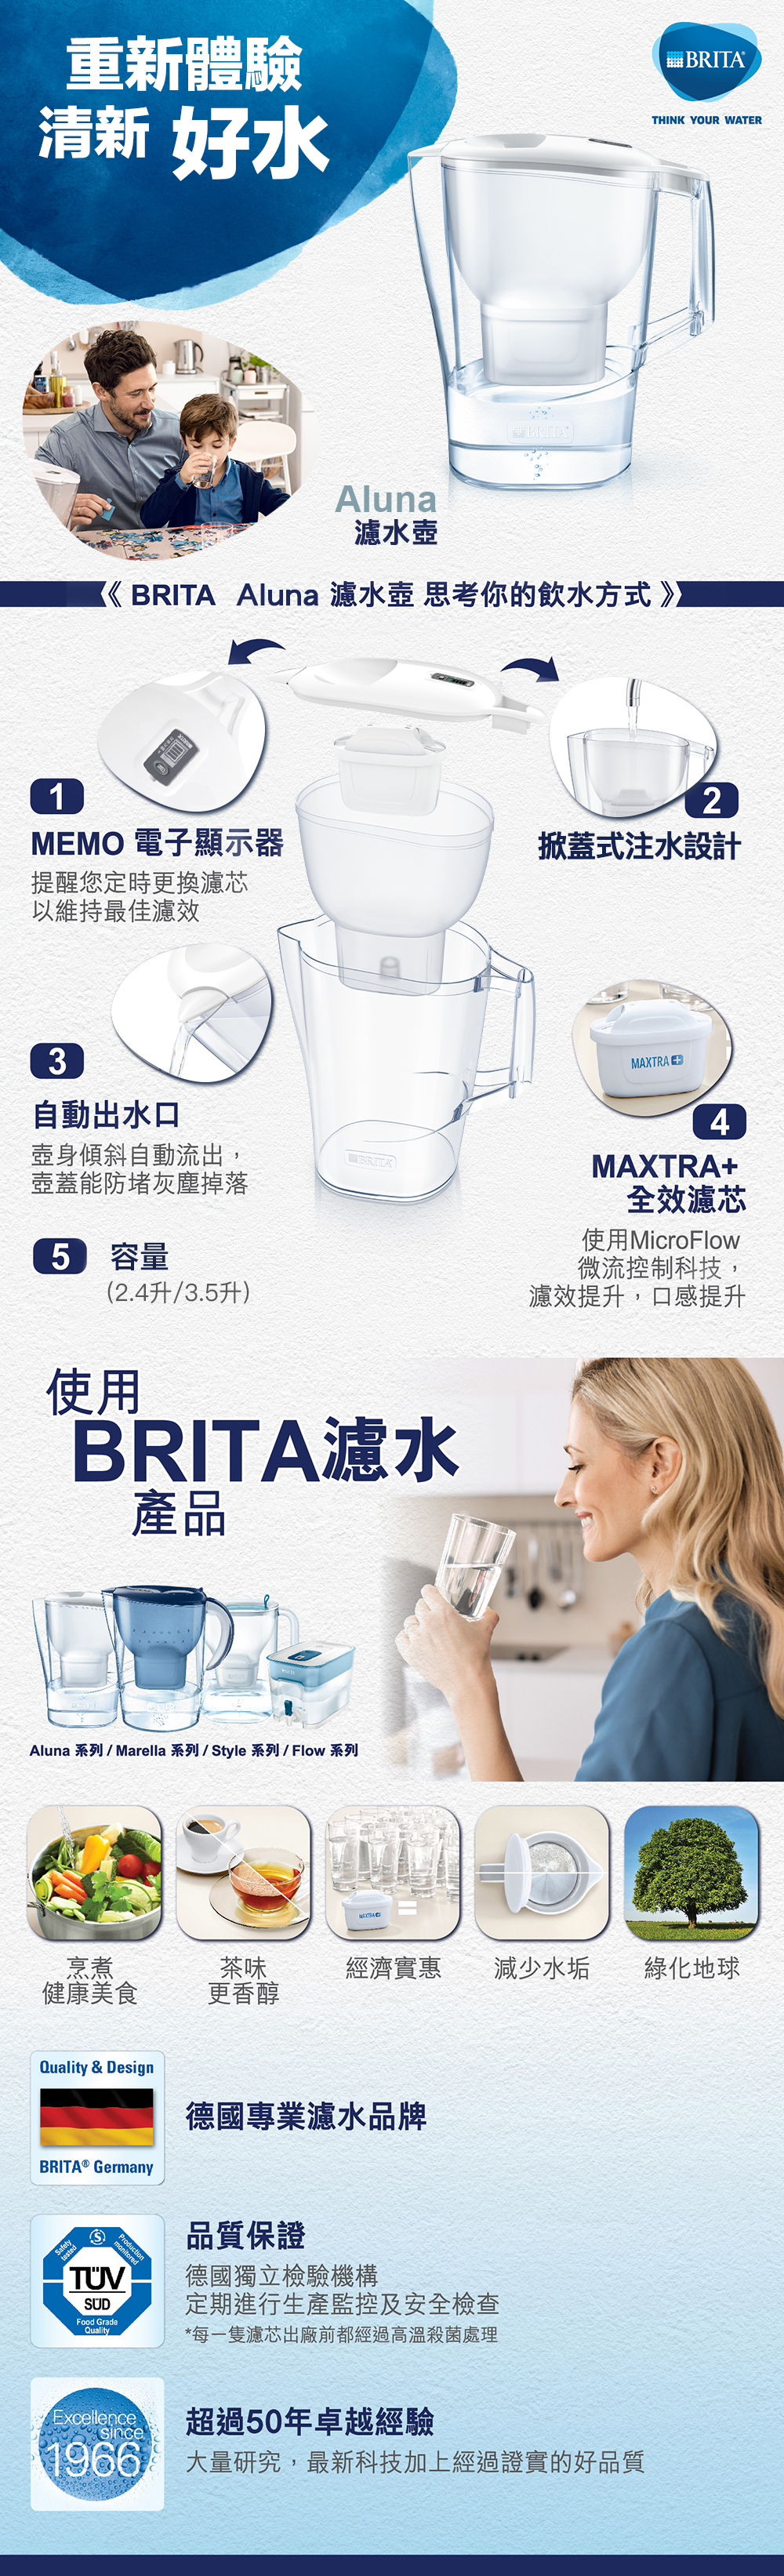 BRITA Aluna water filter jugs | (3.5L/2.4L) Homestuff